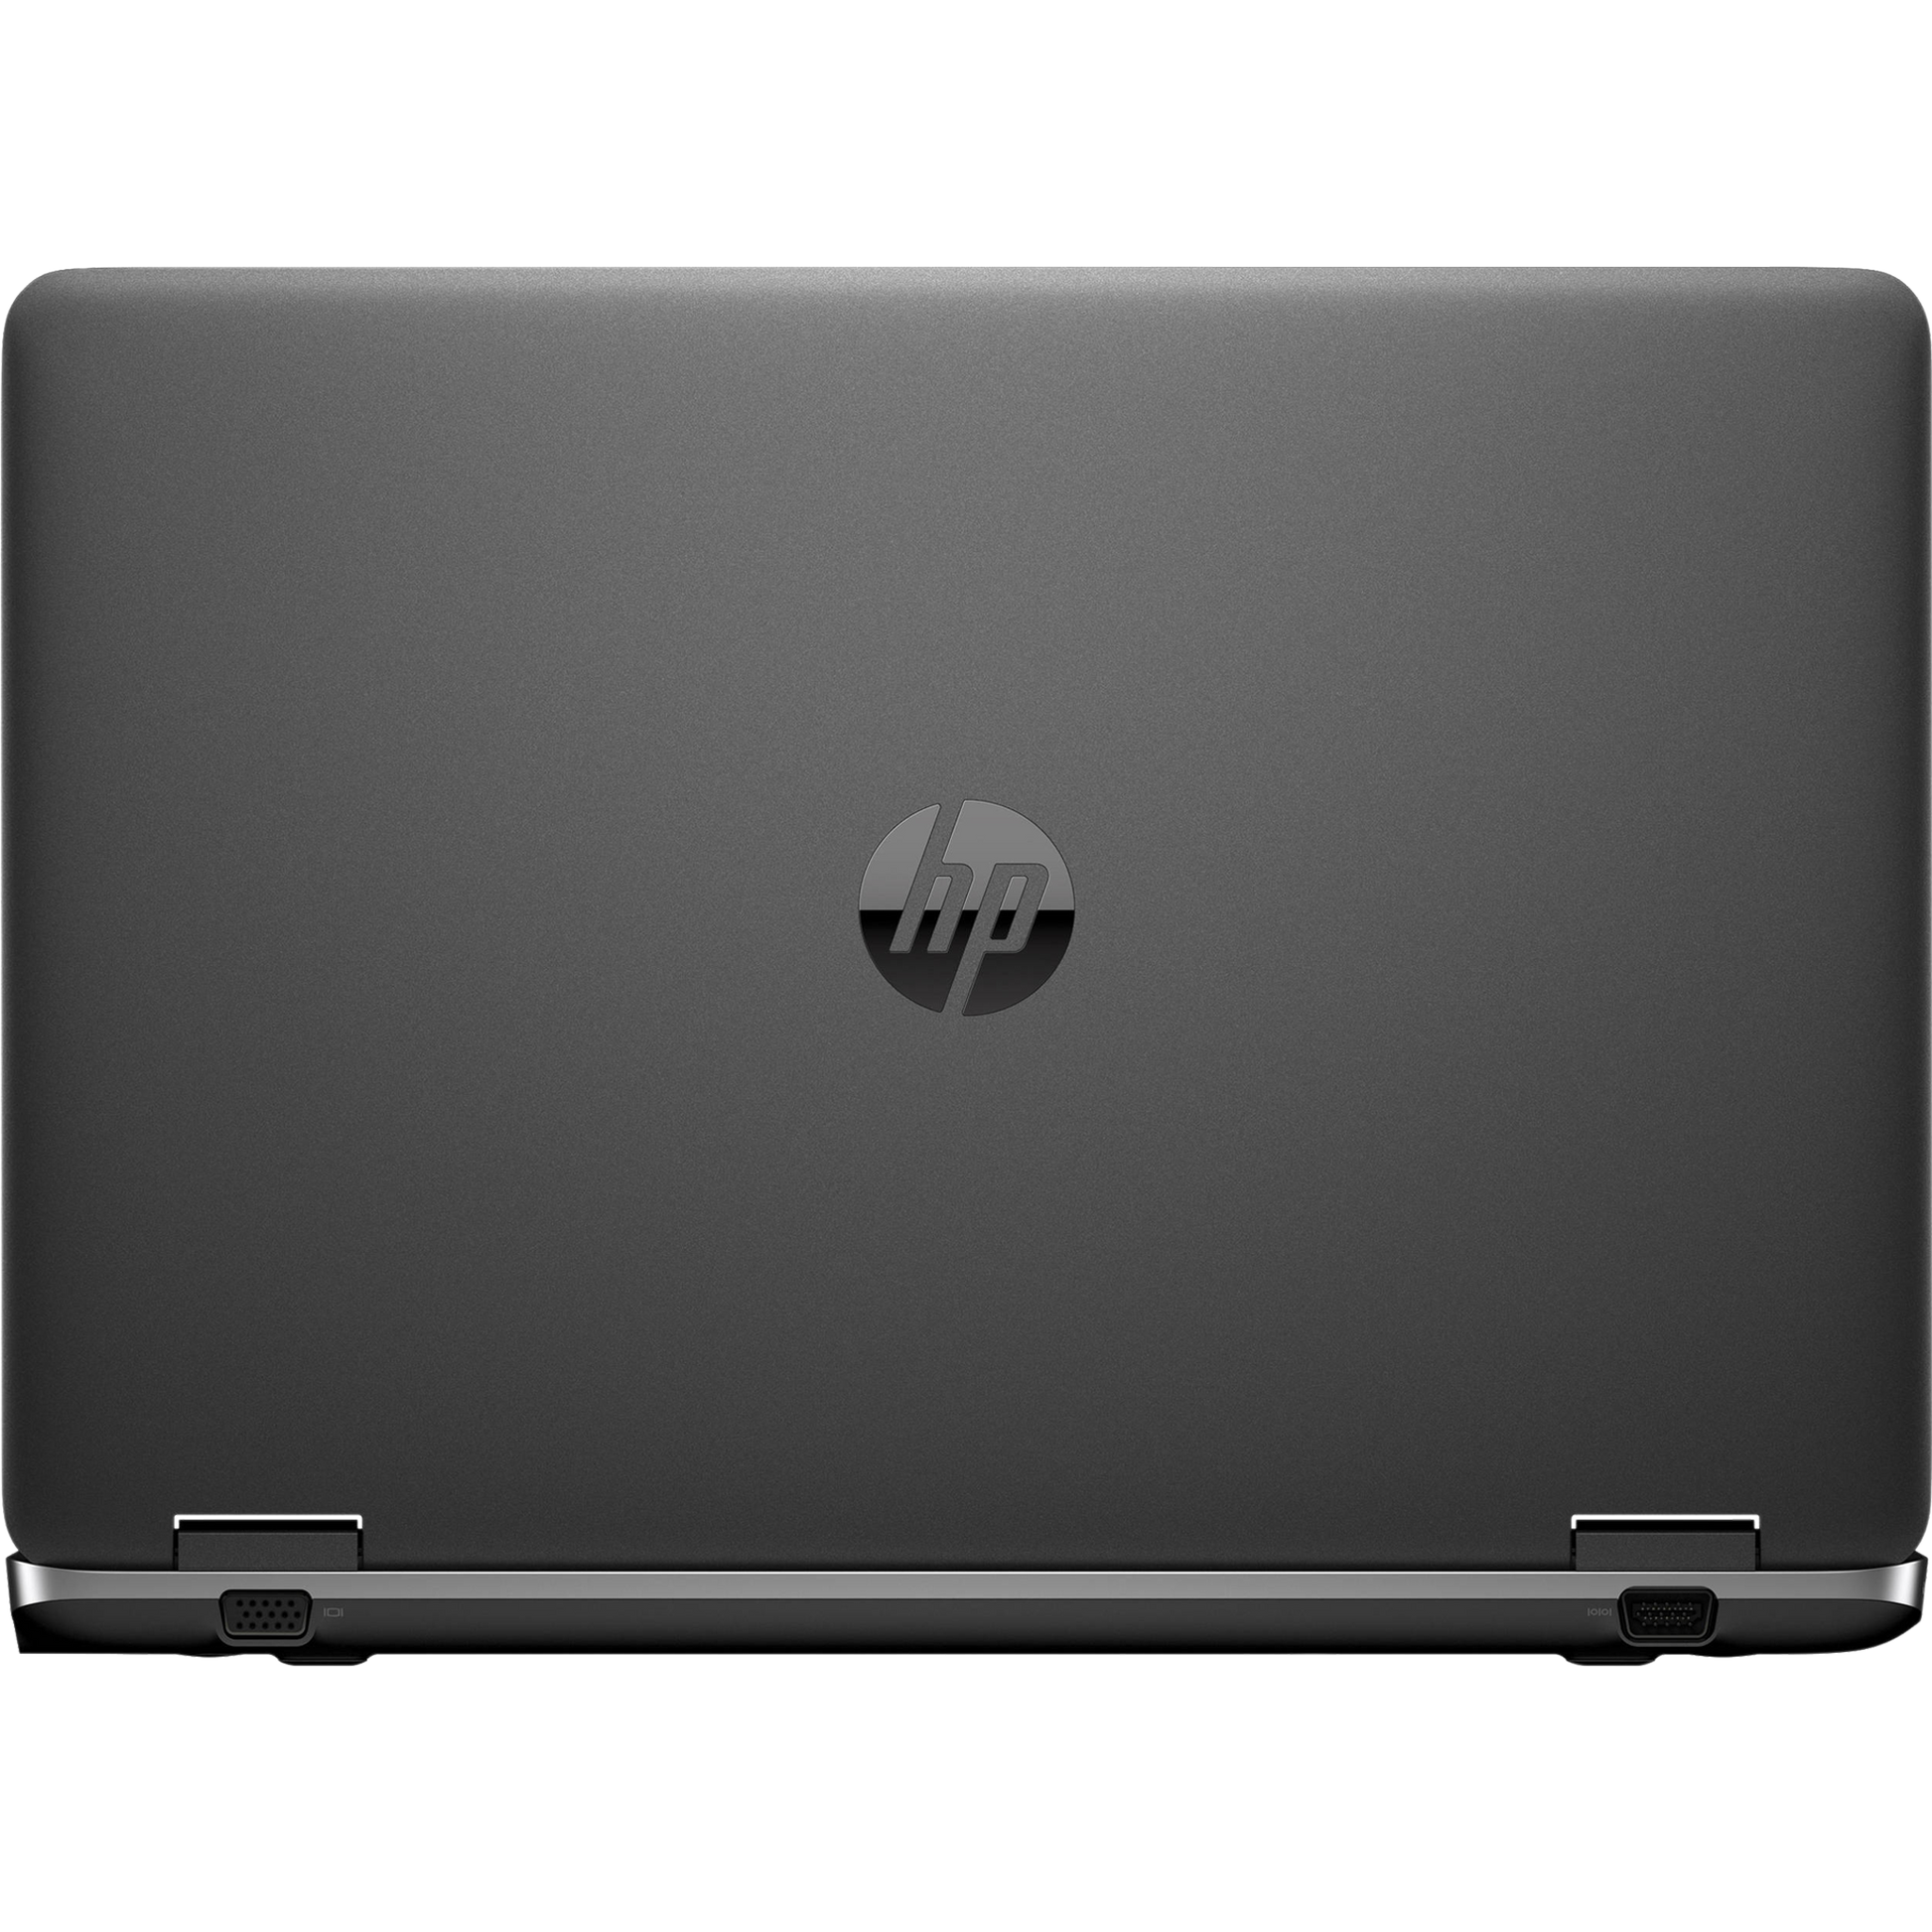 HP ProBook 650 G2 Intel i5, 6th Gen Notebook Laptop with NumPad Laptops - Refurbished